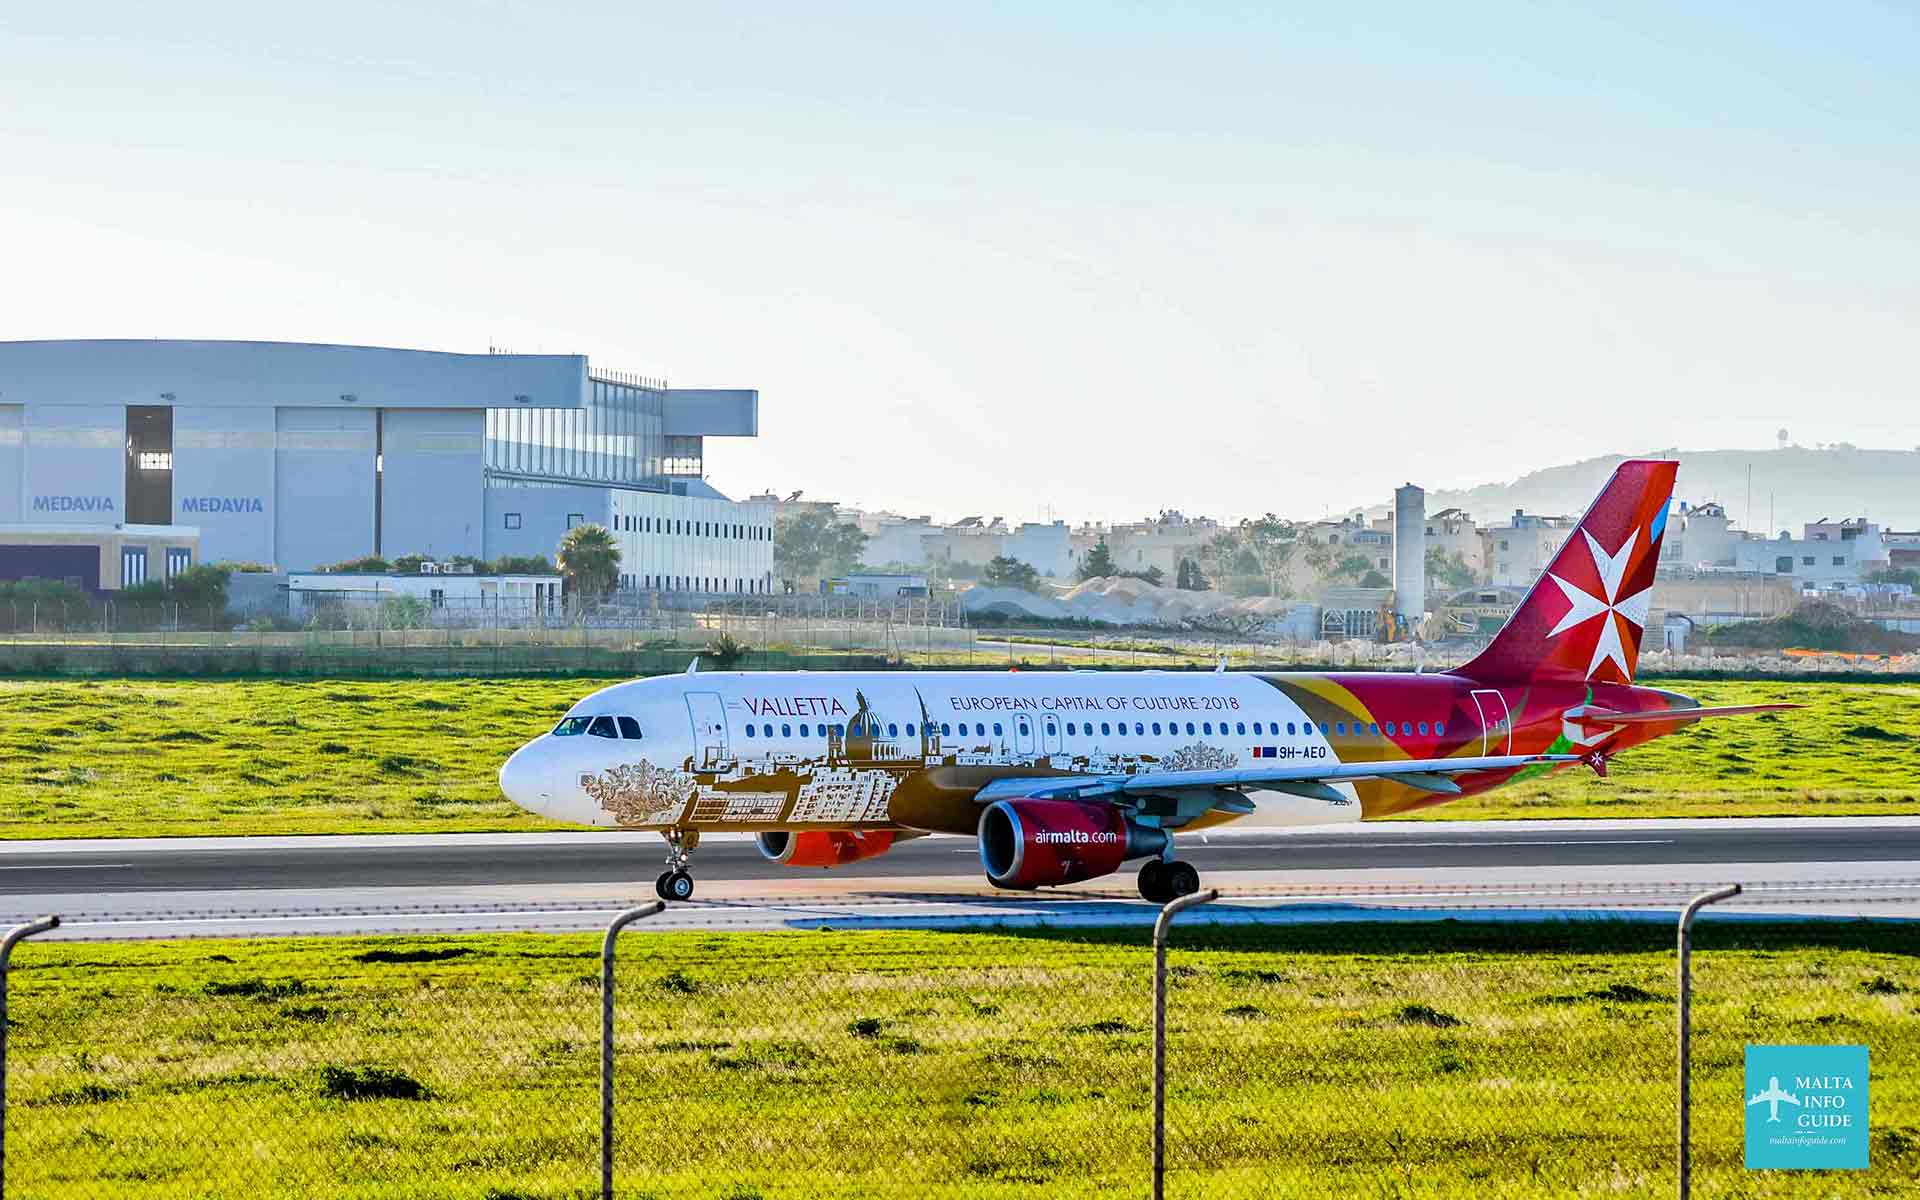 Air Malta departing from Malta International Airport.